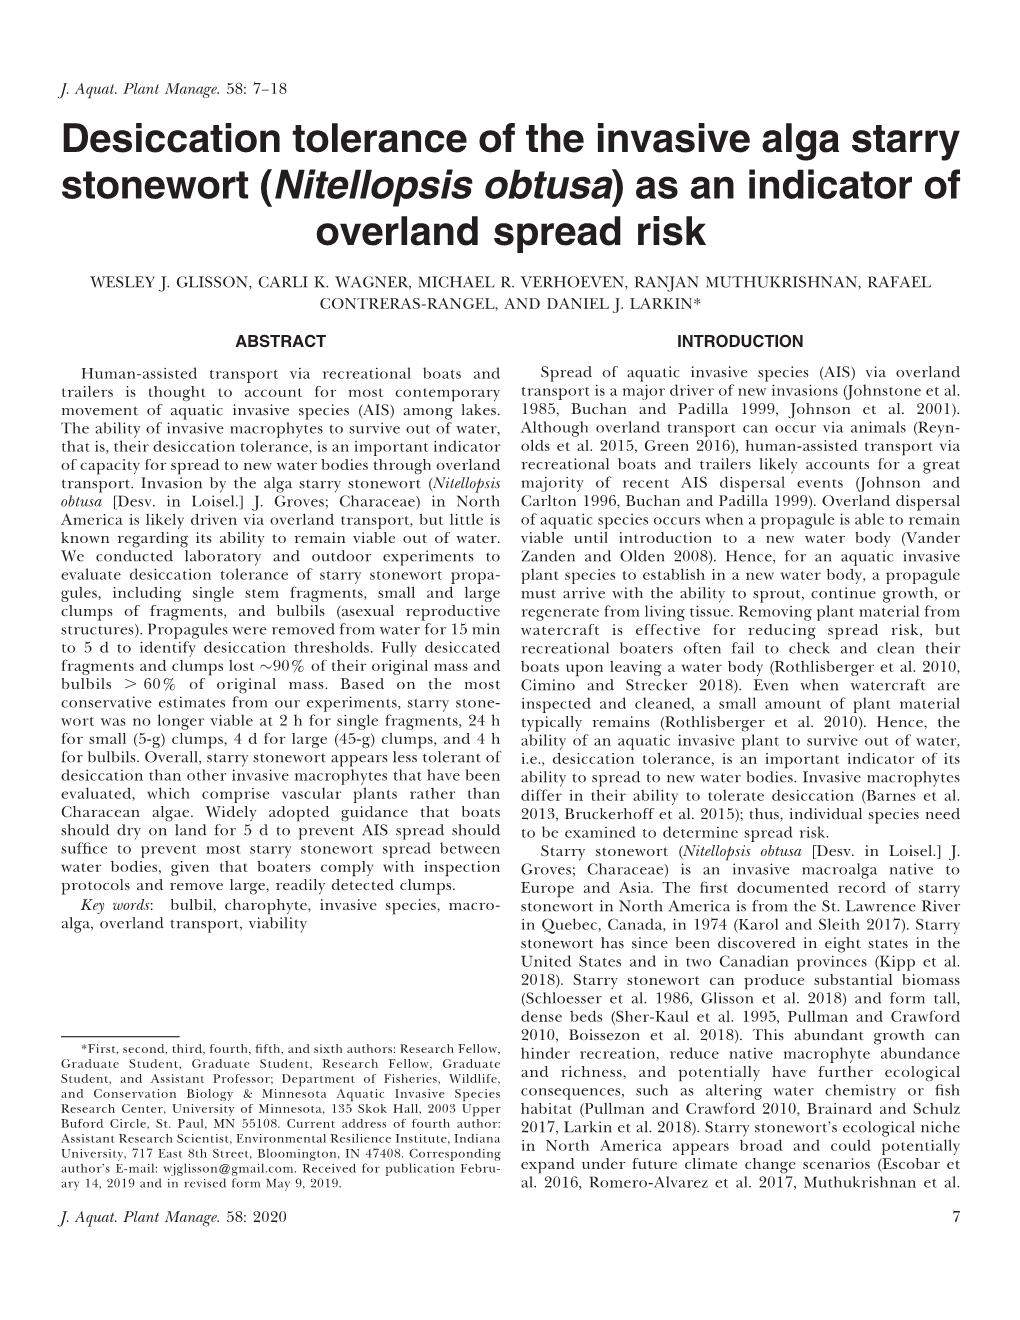 Desiccation Tolerance of the Invasive Alga Starry Stonewort (Nitellopsis Obtusa) As an Indicator of Overland Spread Risk